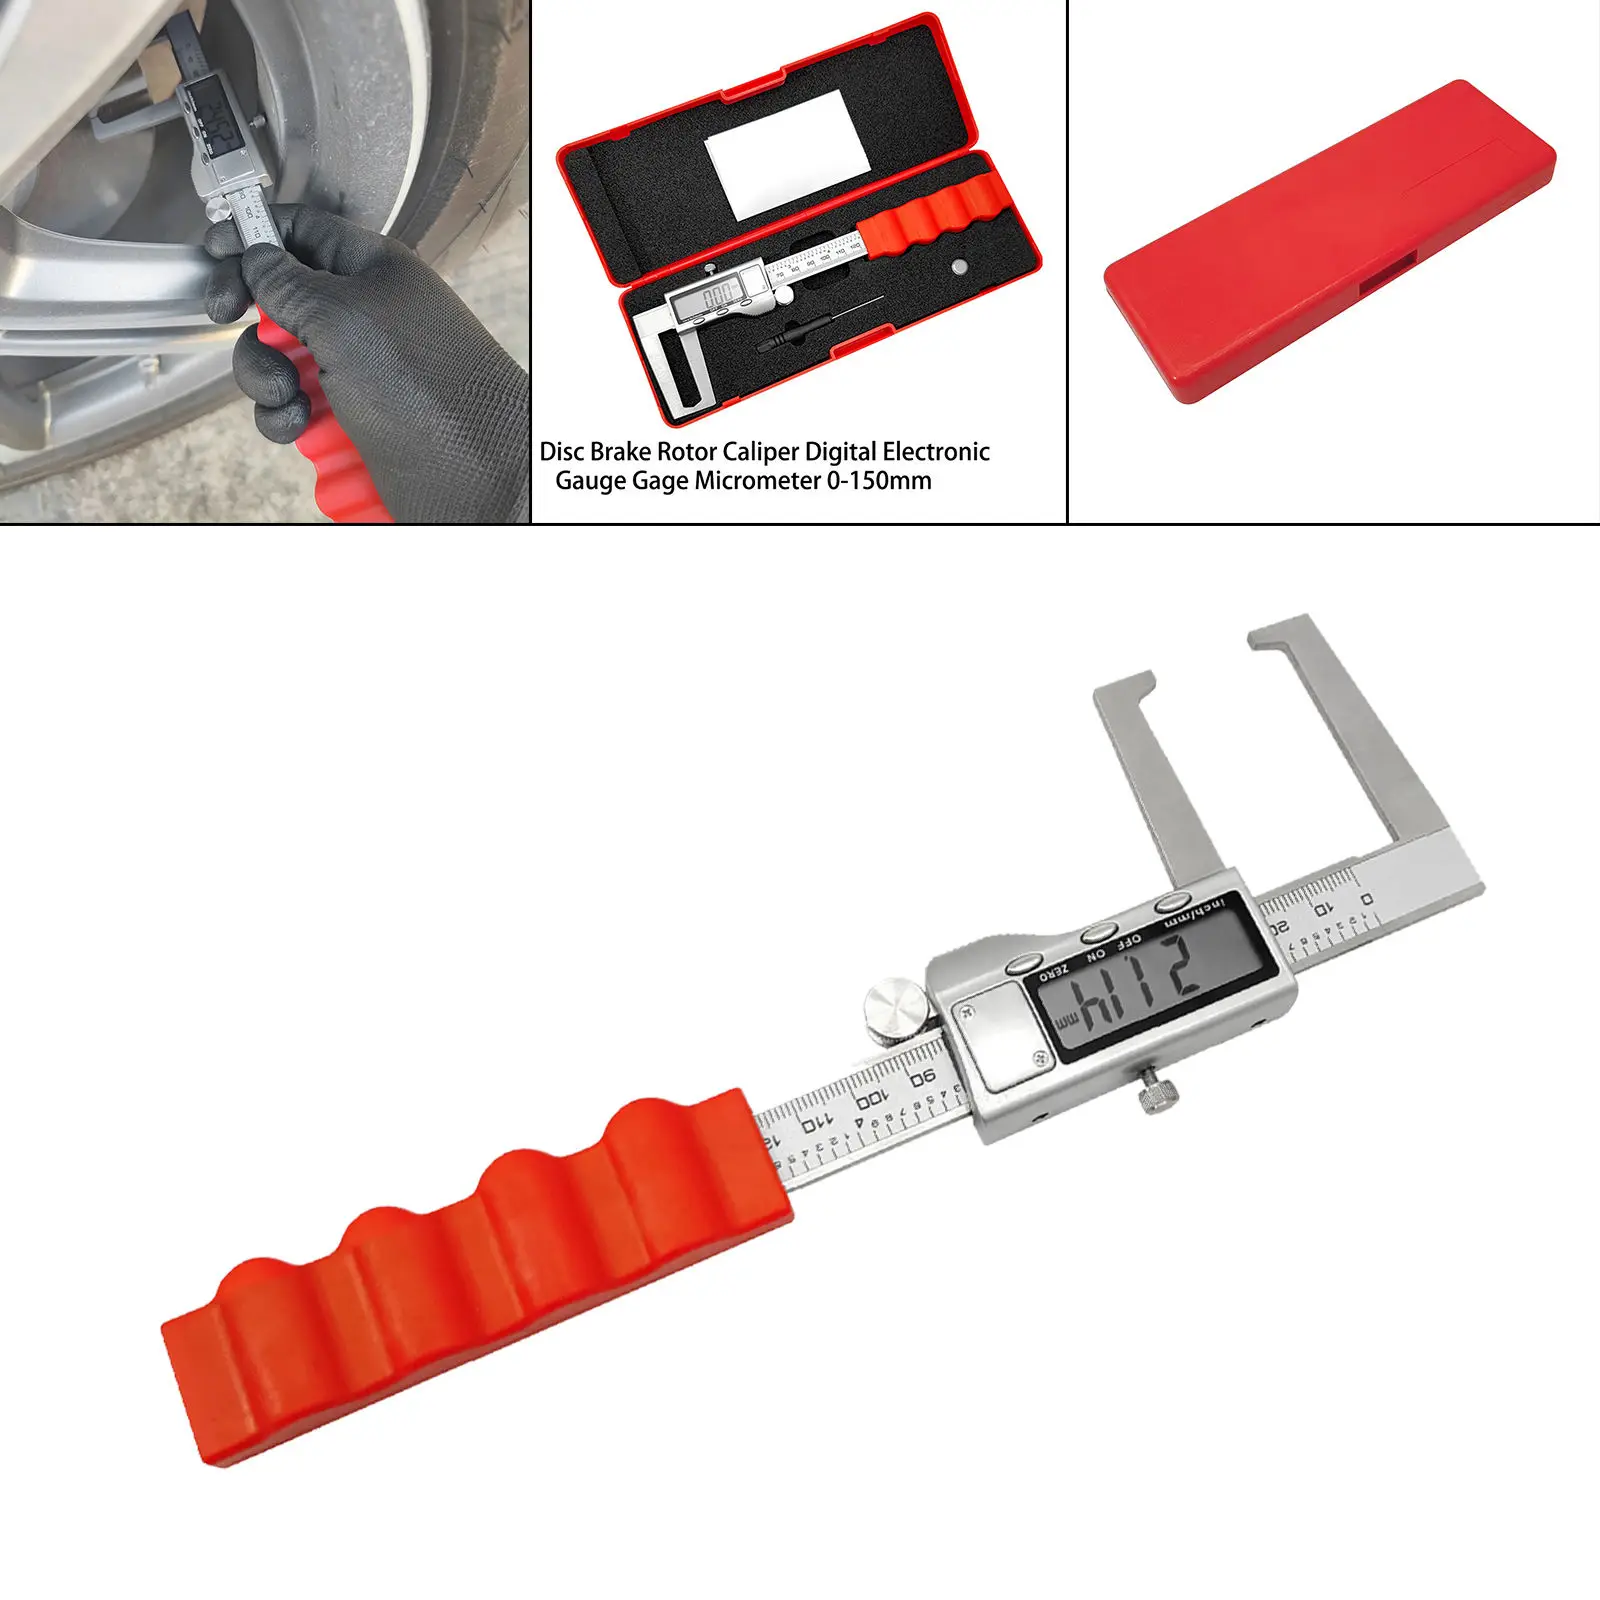 Brake Discs Vernier Caliper Electronic Gauge Gage Micrometer 0-150mm